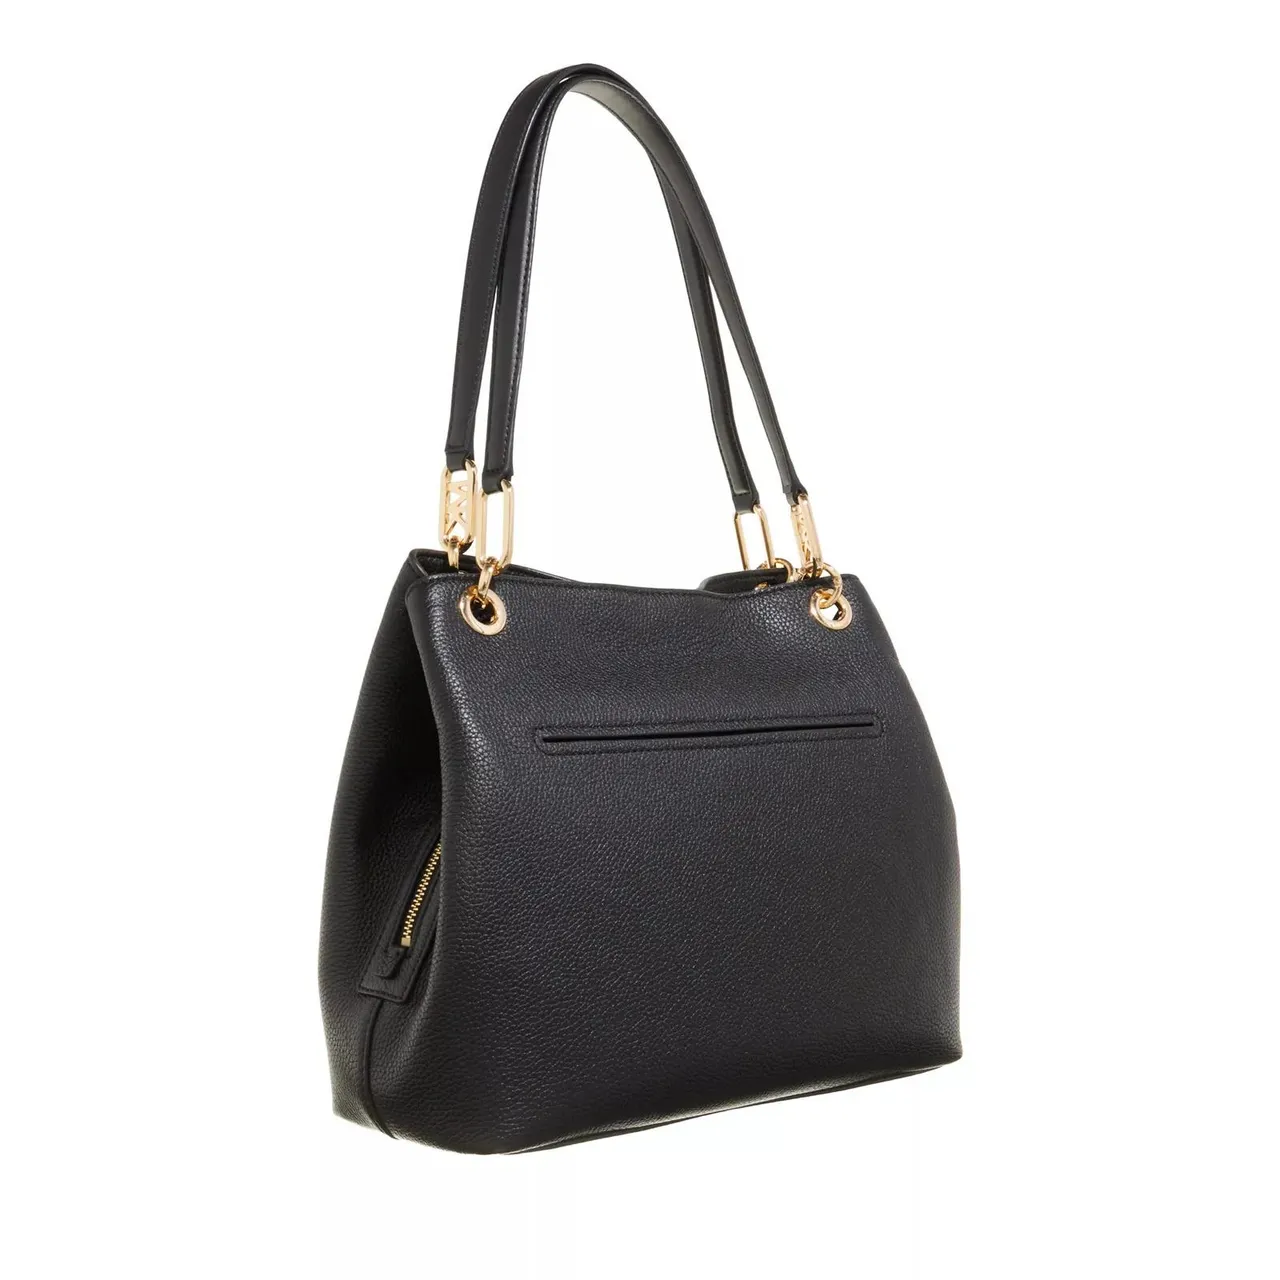 Michael Kors Shopping Bags - Kensington Large Shoulder Tote - black - Shopping Bags for ladies